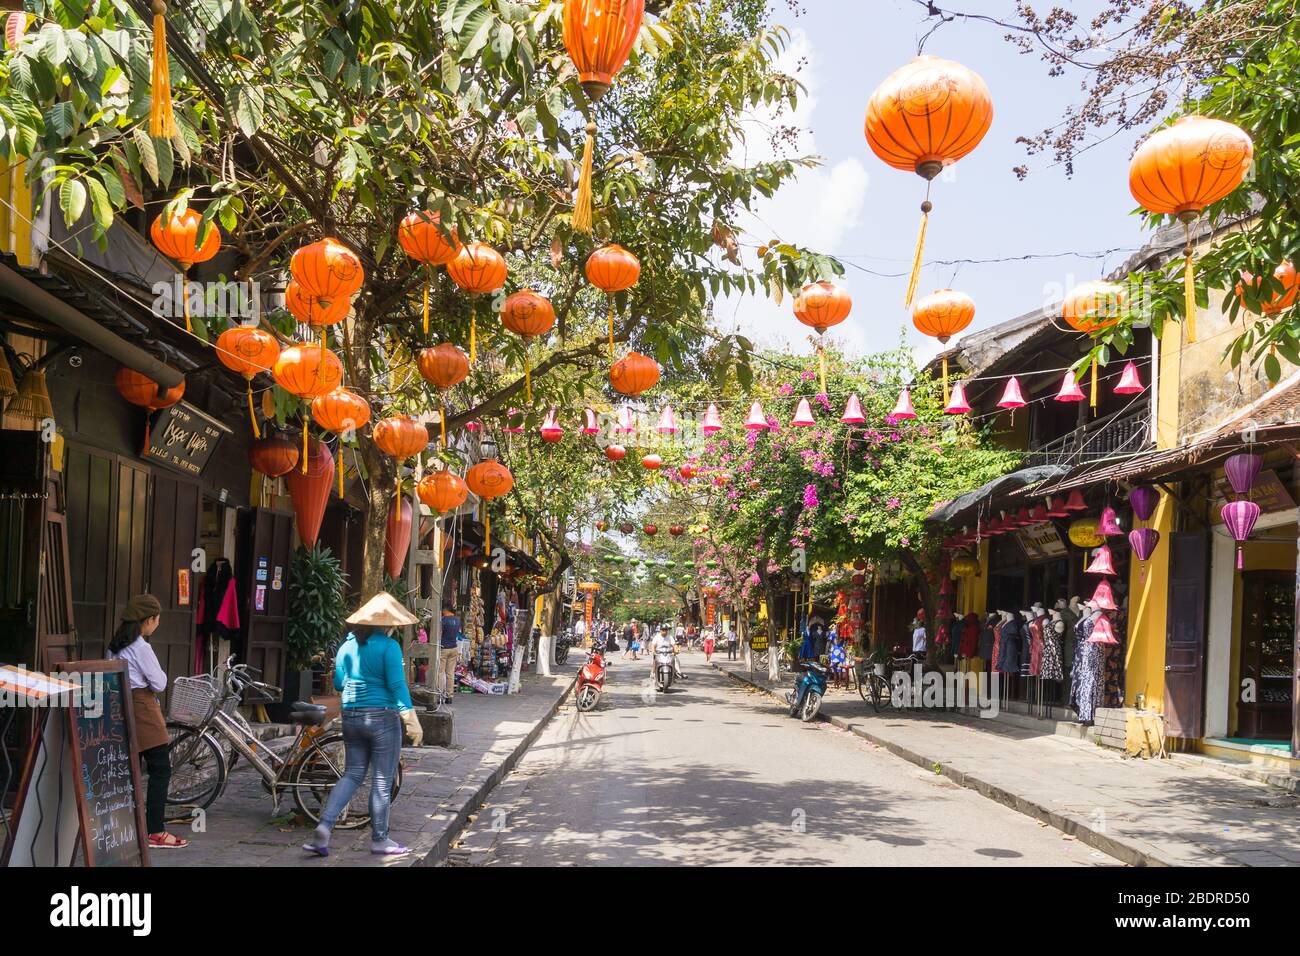 Vietnam Hoi An - Street with orange lanterns in Hoi An ancient town, Vietnam, Southeast Asia. Stock Photo